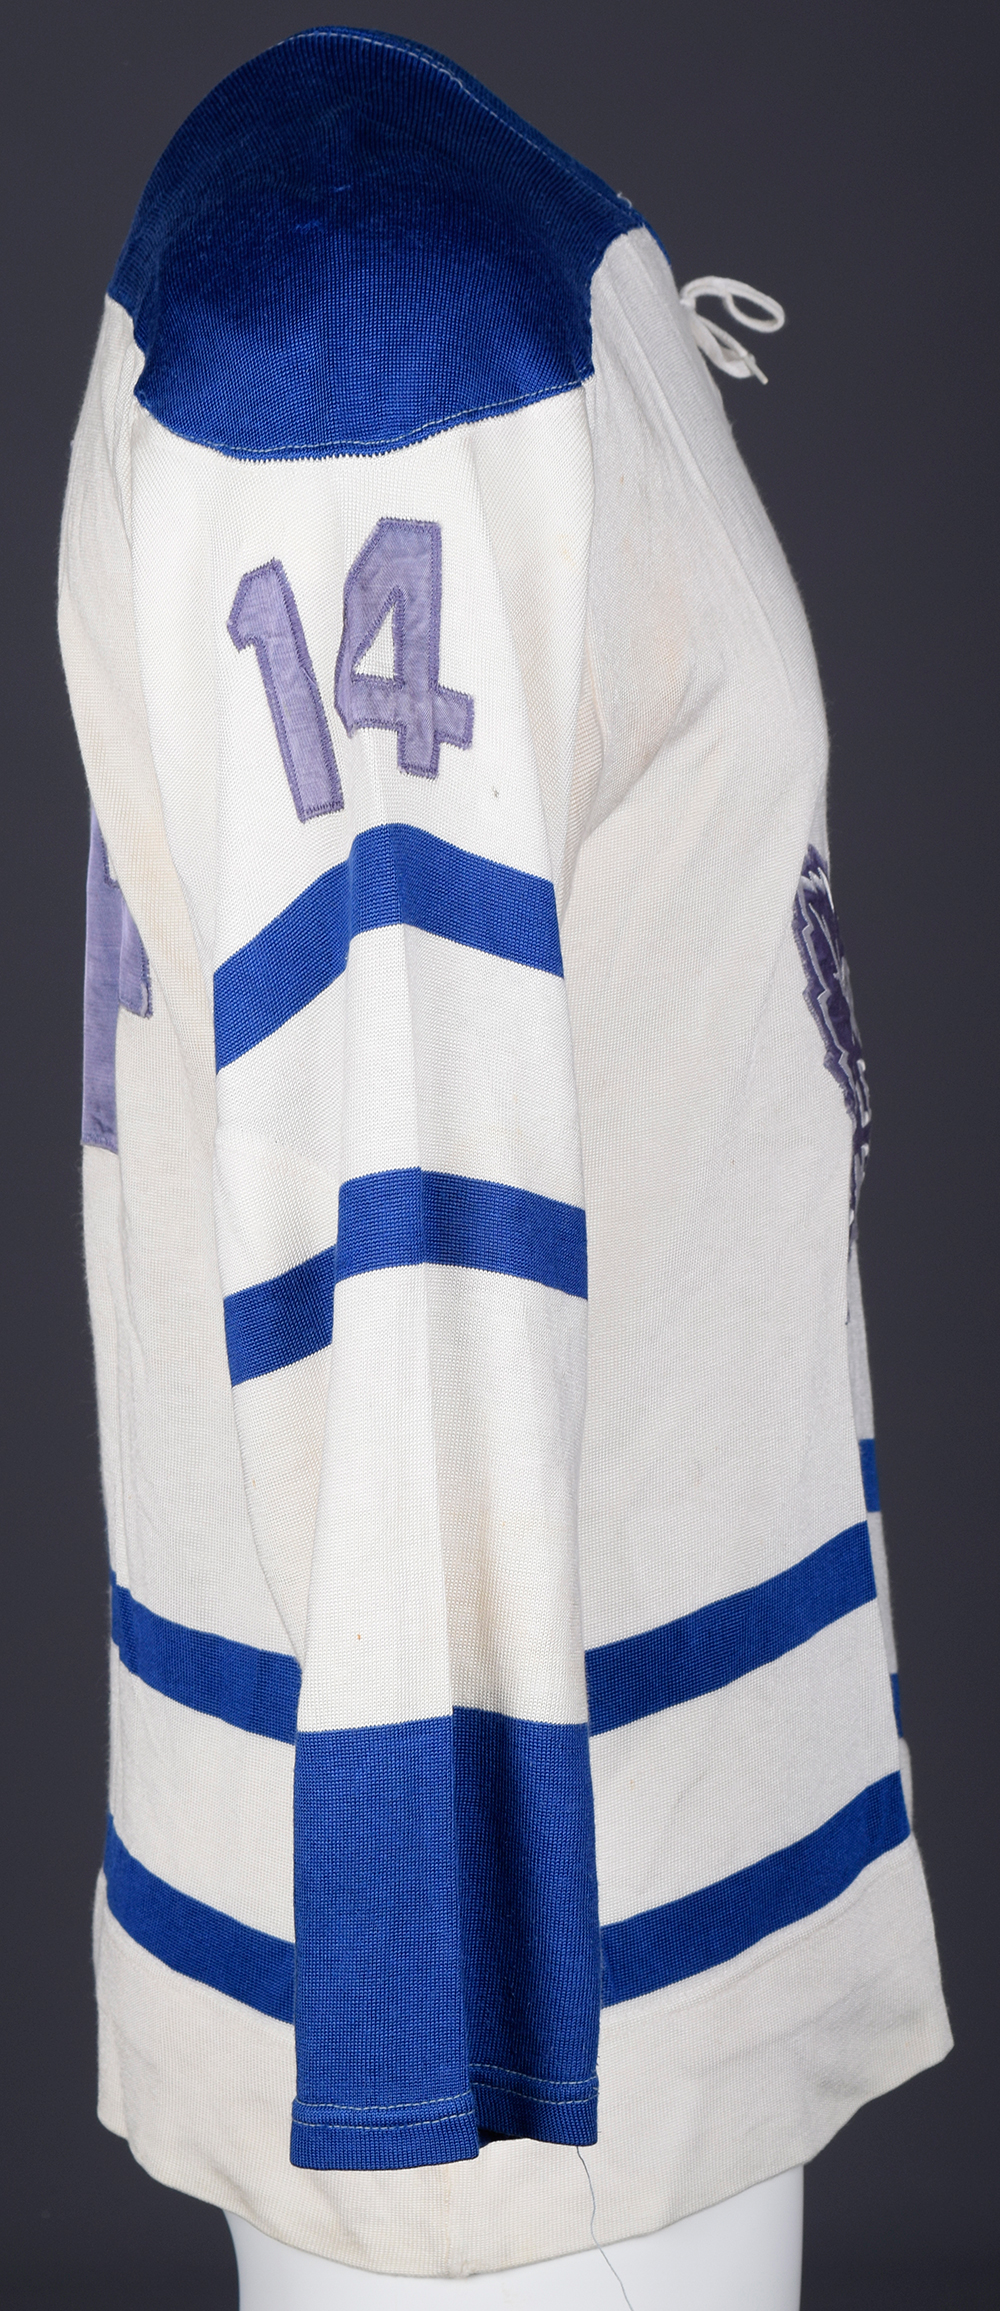 Dave Keon 1965 Toronto Maple Leafs Vintage Throwback NHL Hockey Jersey